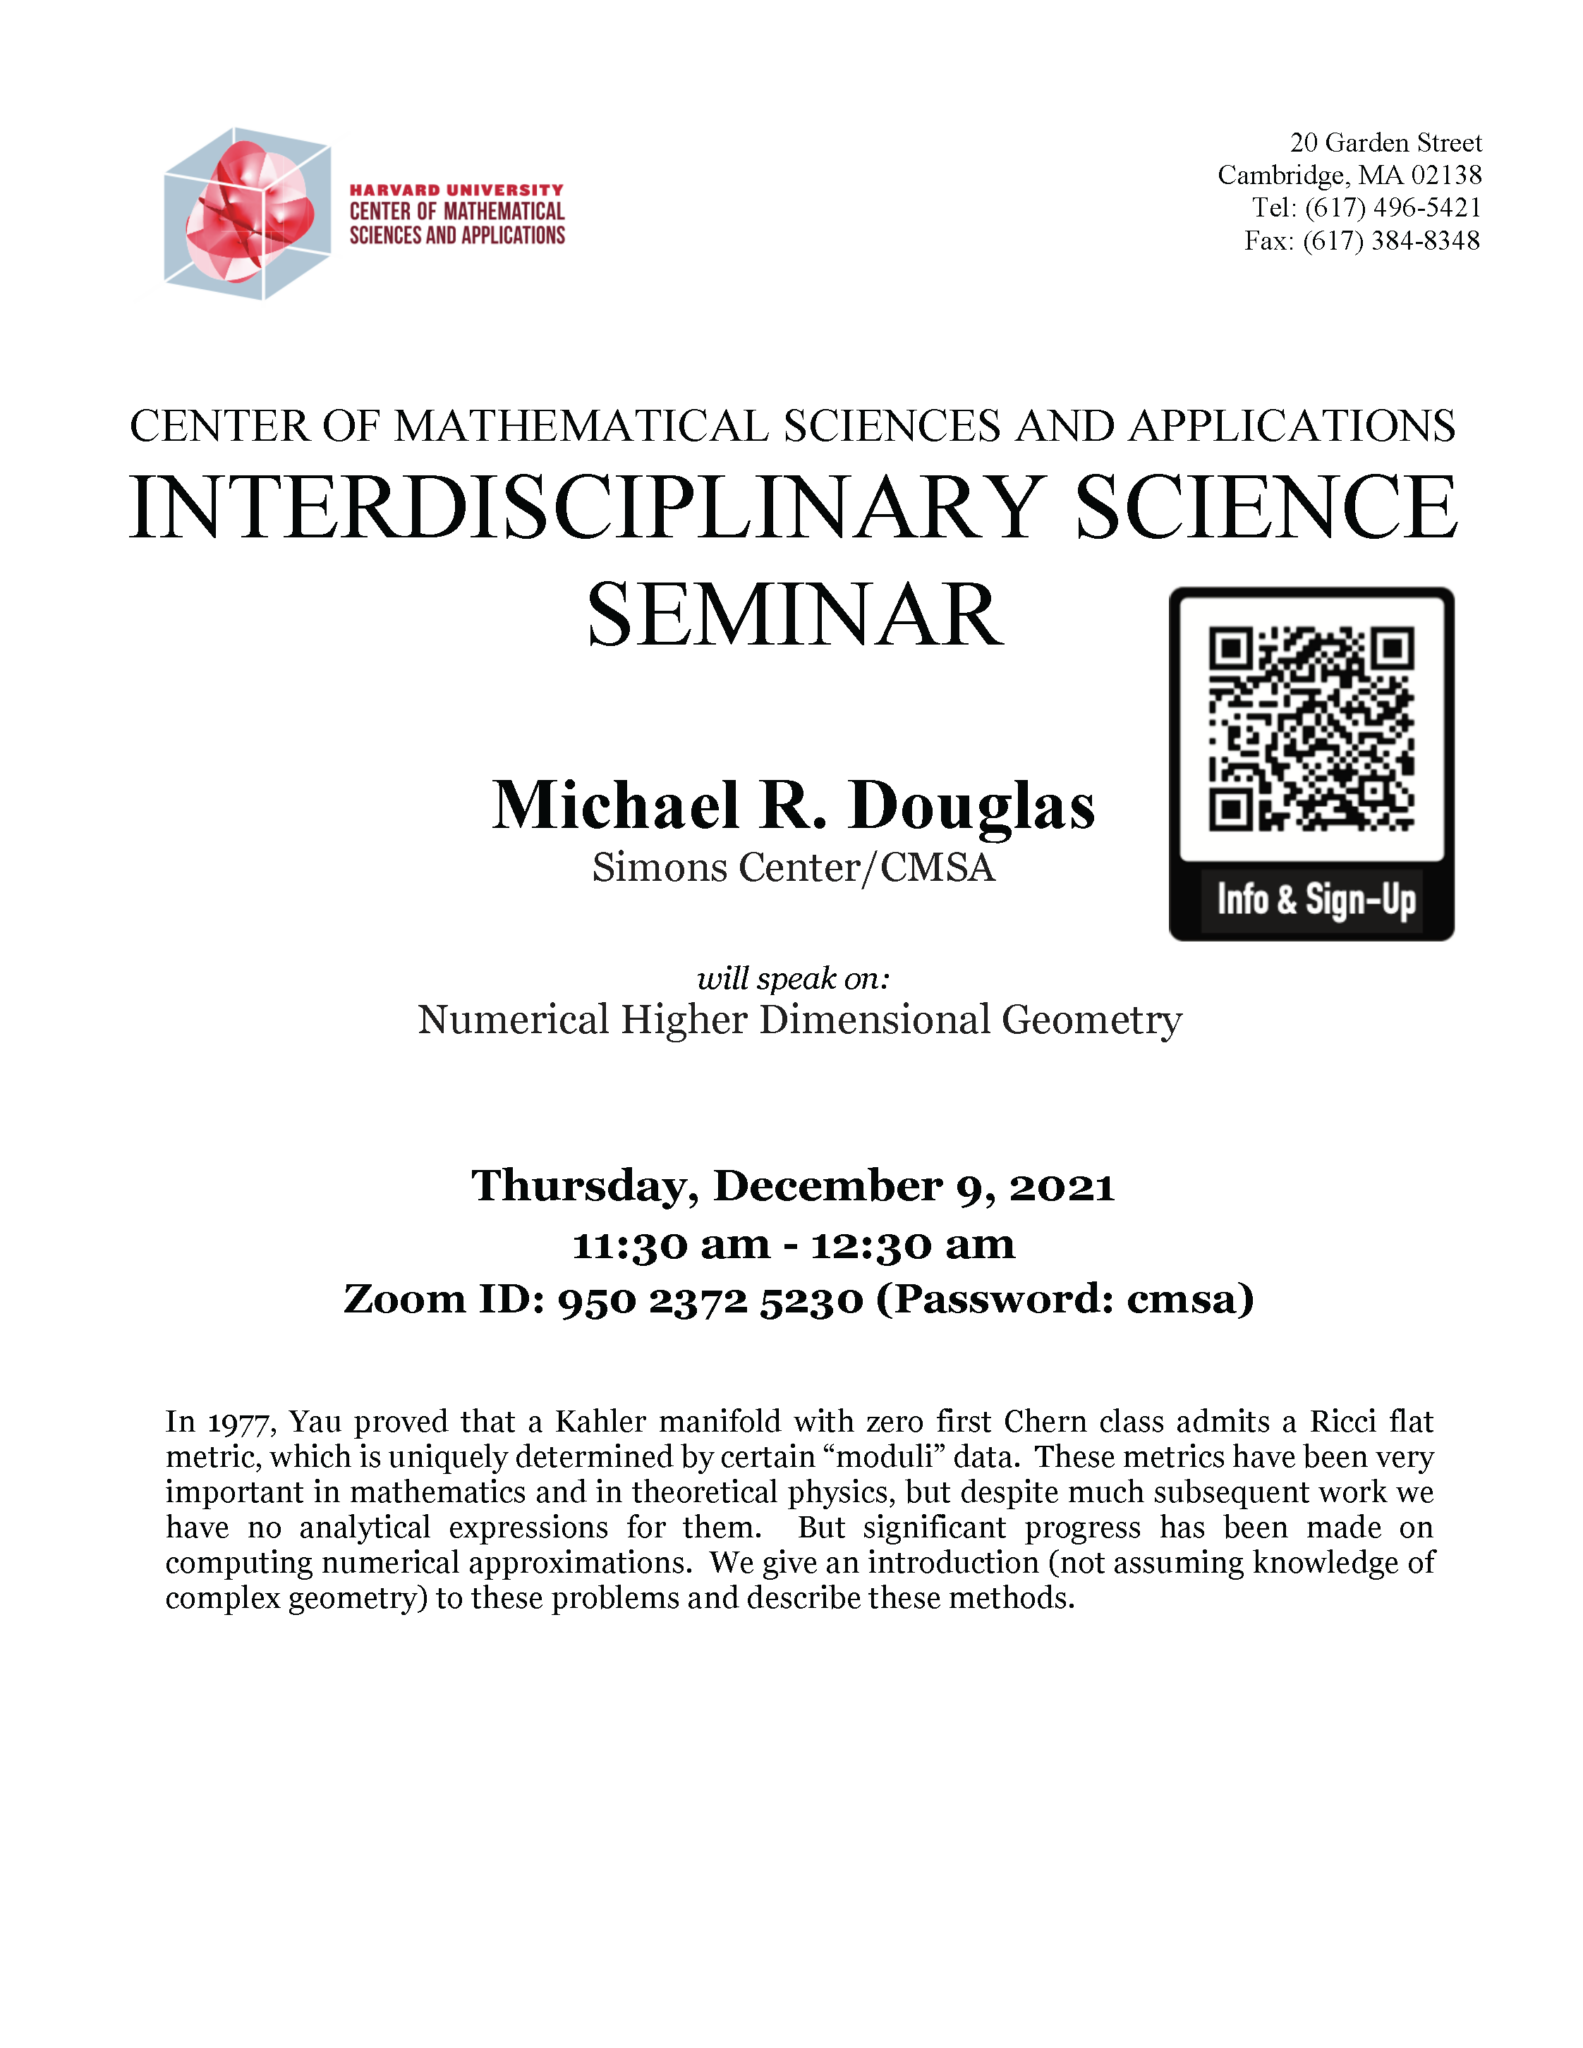 CMSA-Interdisciplinary-Science-Seminar-12.09.21-1583x2048